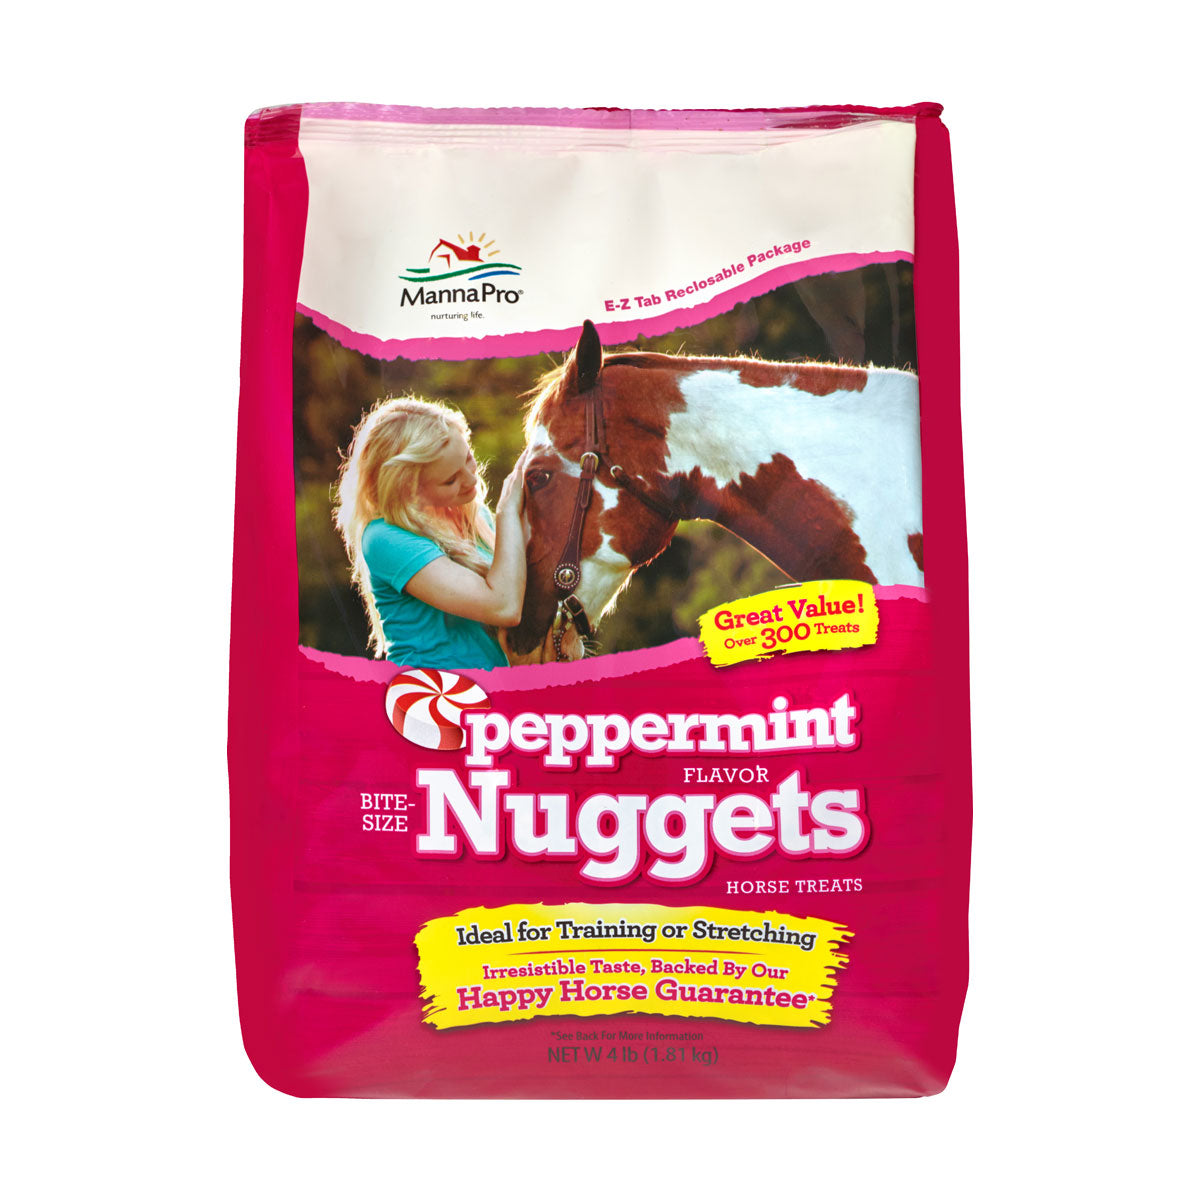 Manna Pro Bite Size Nuggets Horse Treats Barnstaple Equestrian Supplies